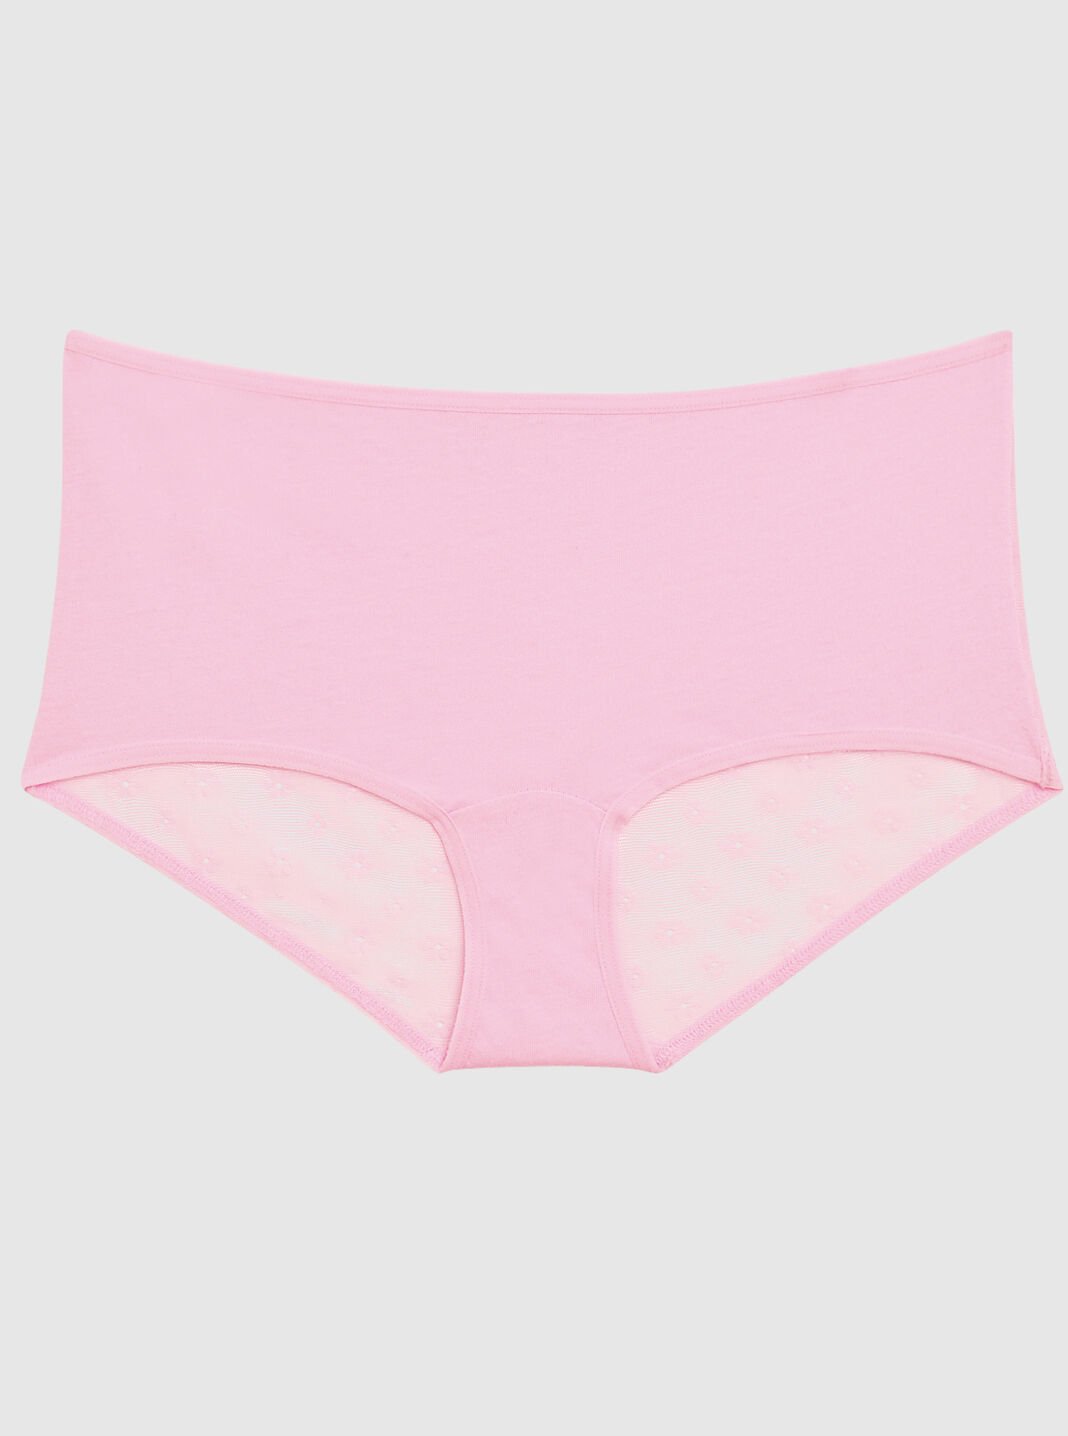 Pink Victoria secret period panty boy short xl